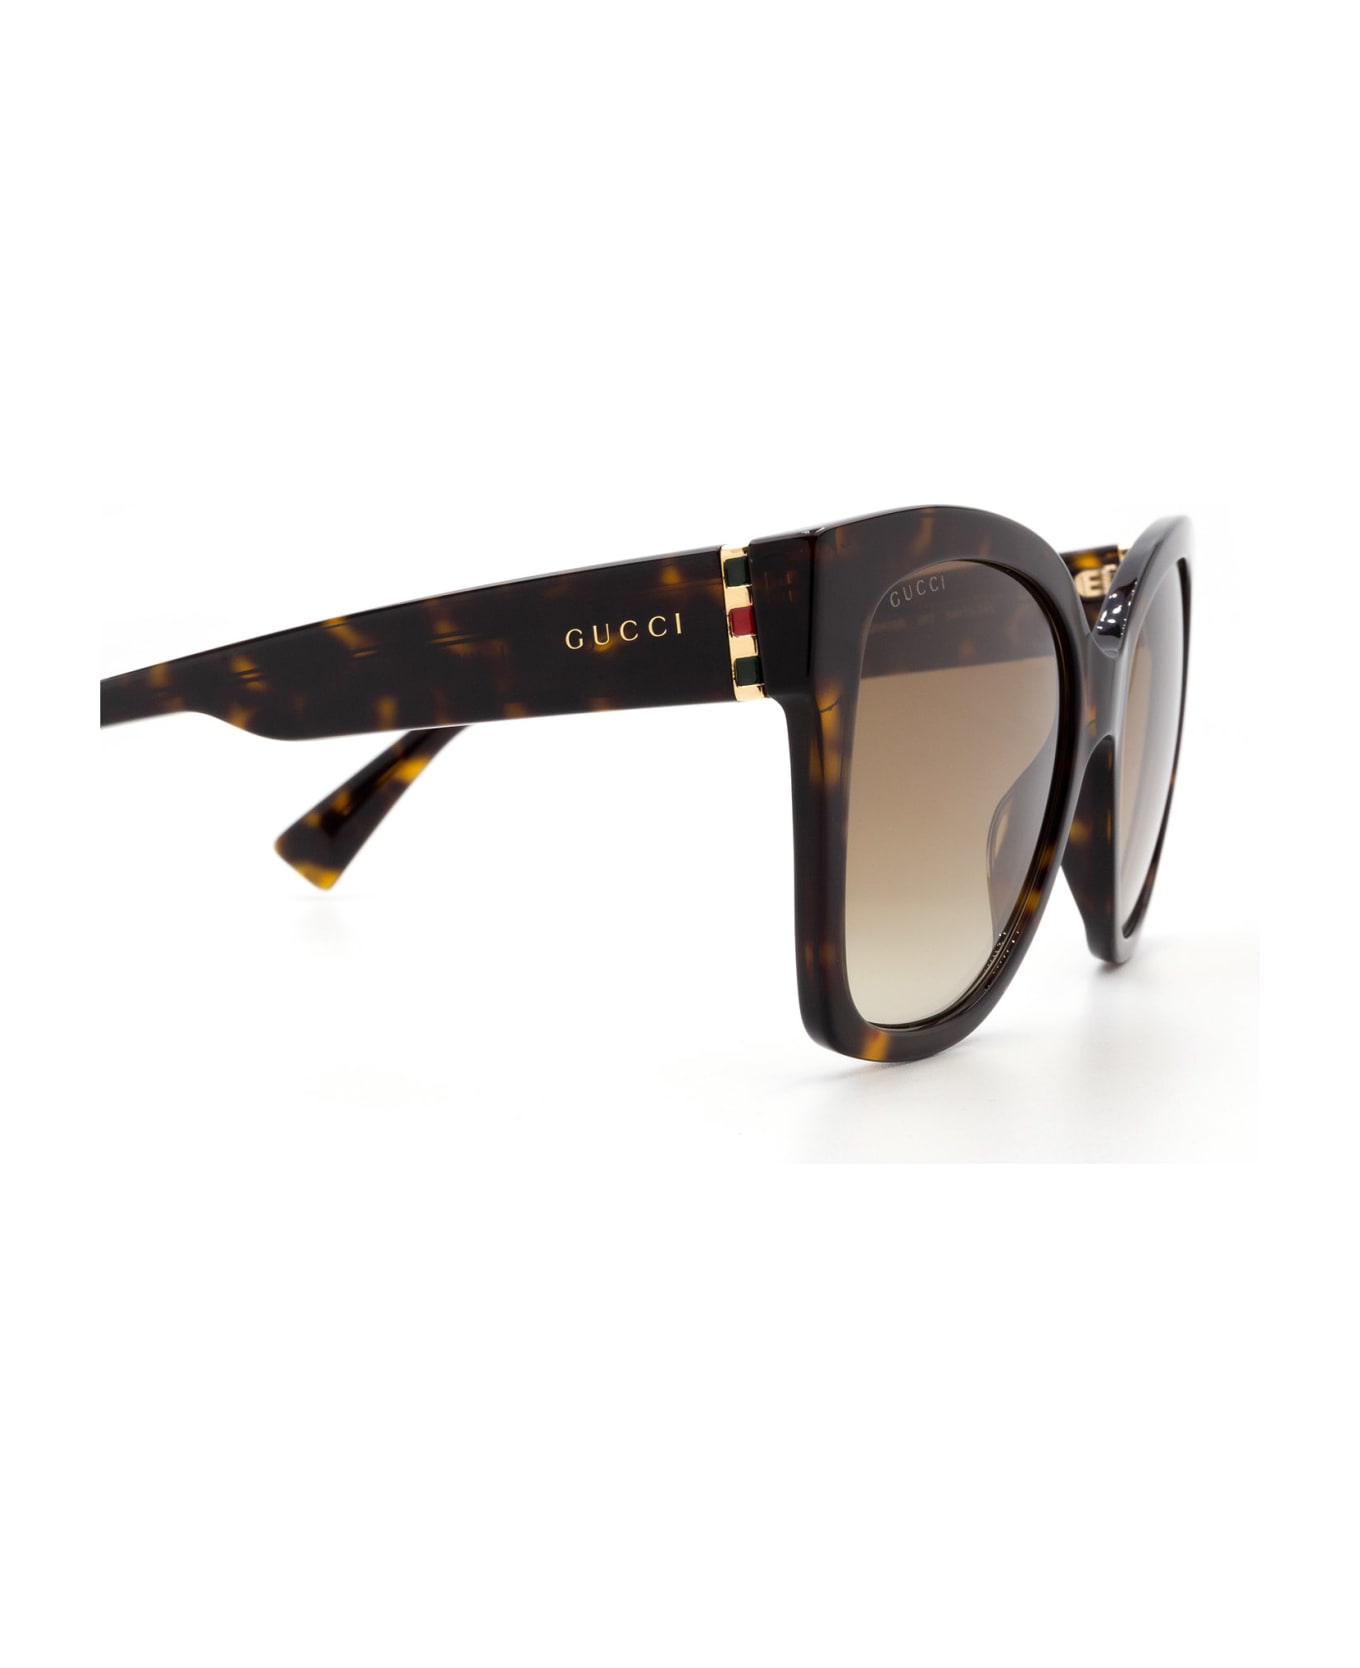 Gucci Eyewear Gg0459s Havana Sunglasses - Havana